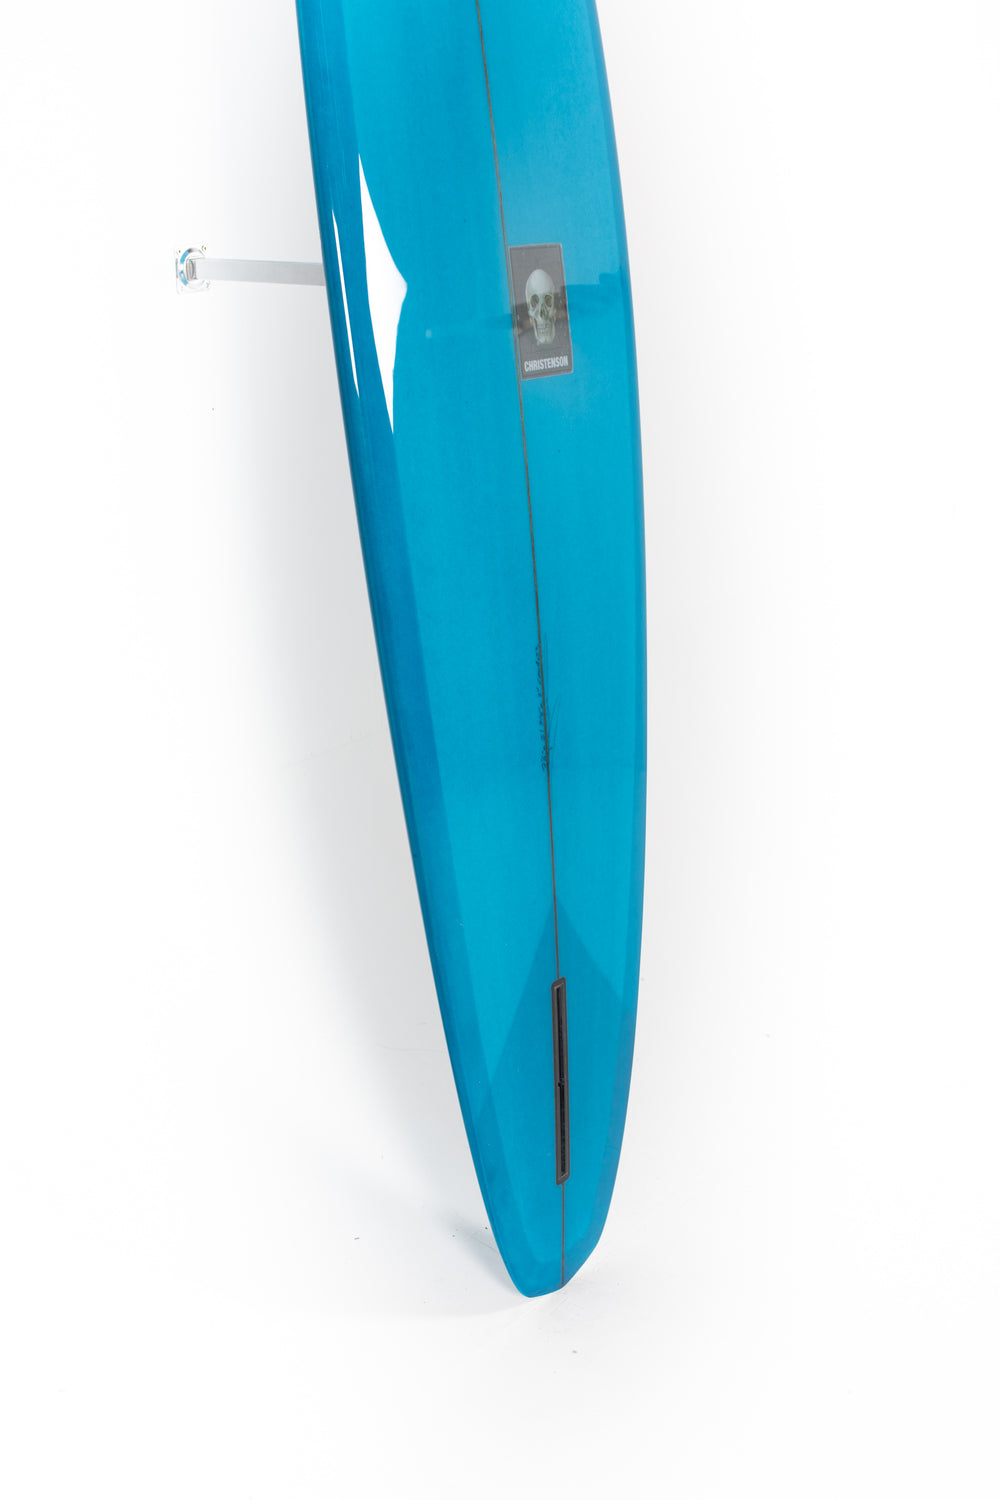 Christenson Surfboards - ULTRA TRACKER - 7'6